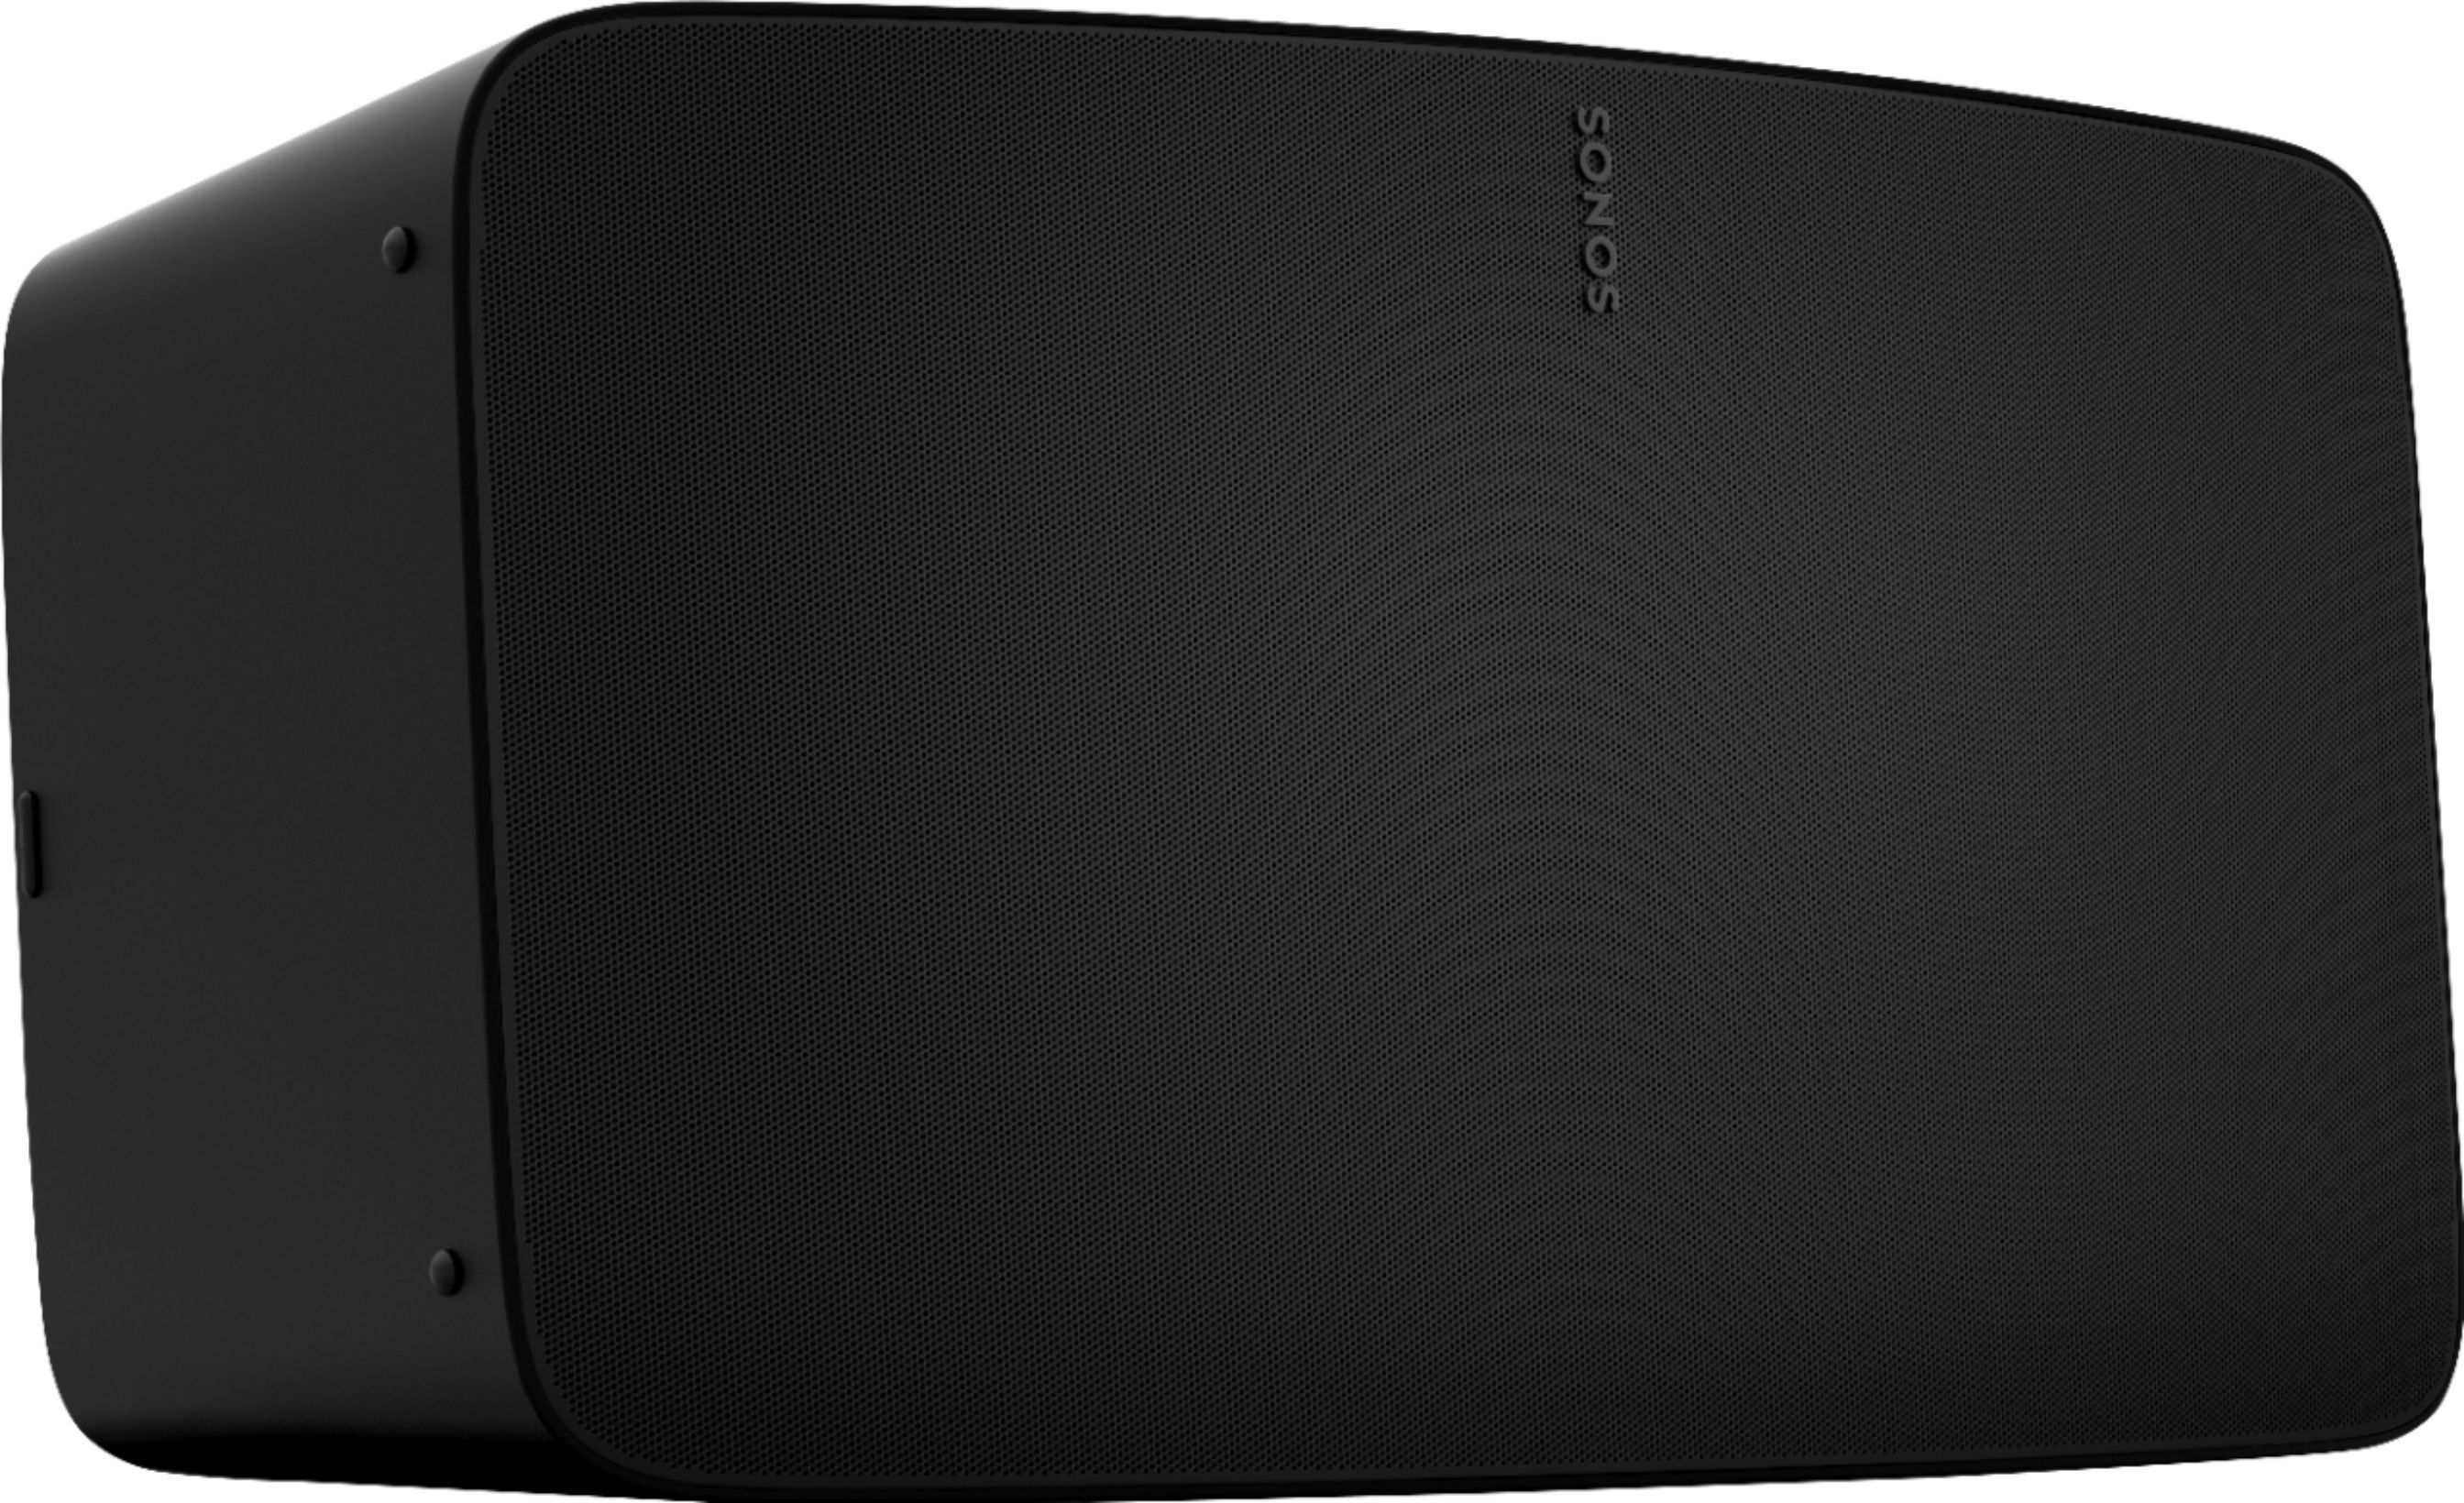 Sonos Five Wireless Smart Speaker Black FIVE1US1BLK - Best Buy | Best Buy U.S.